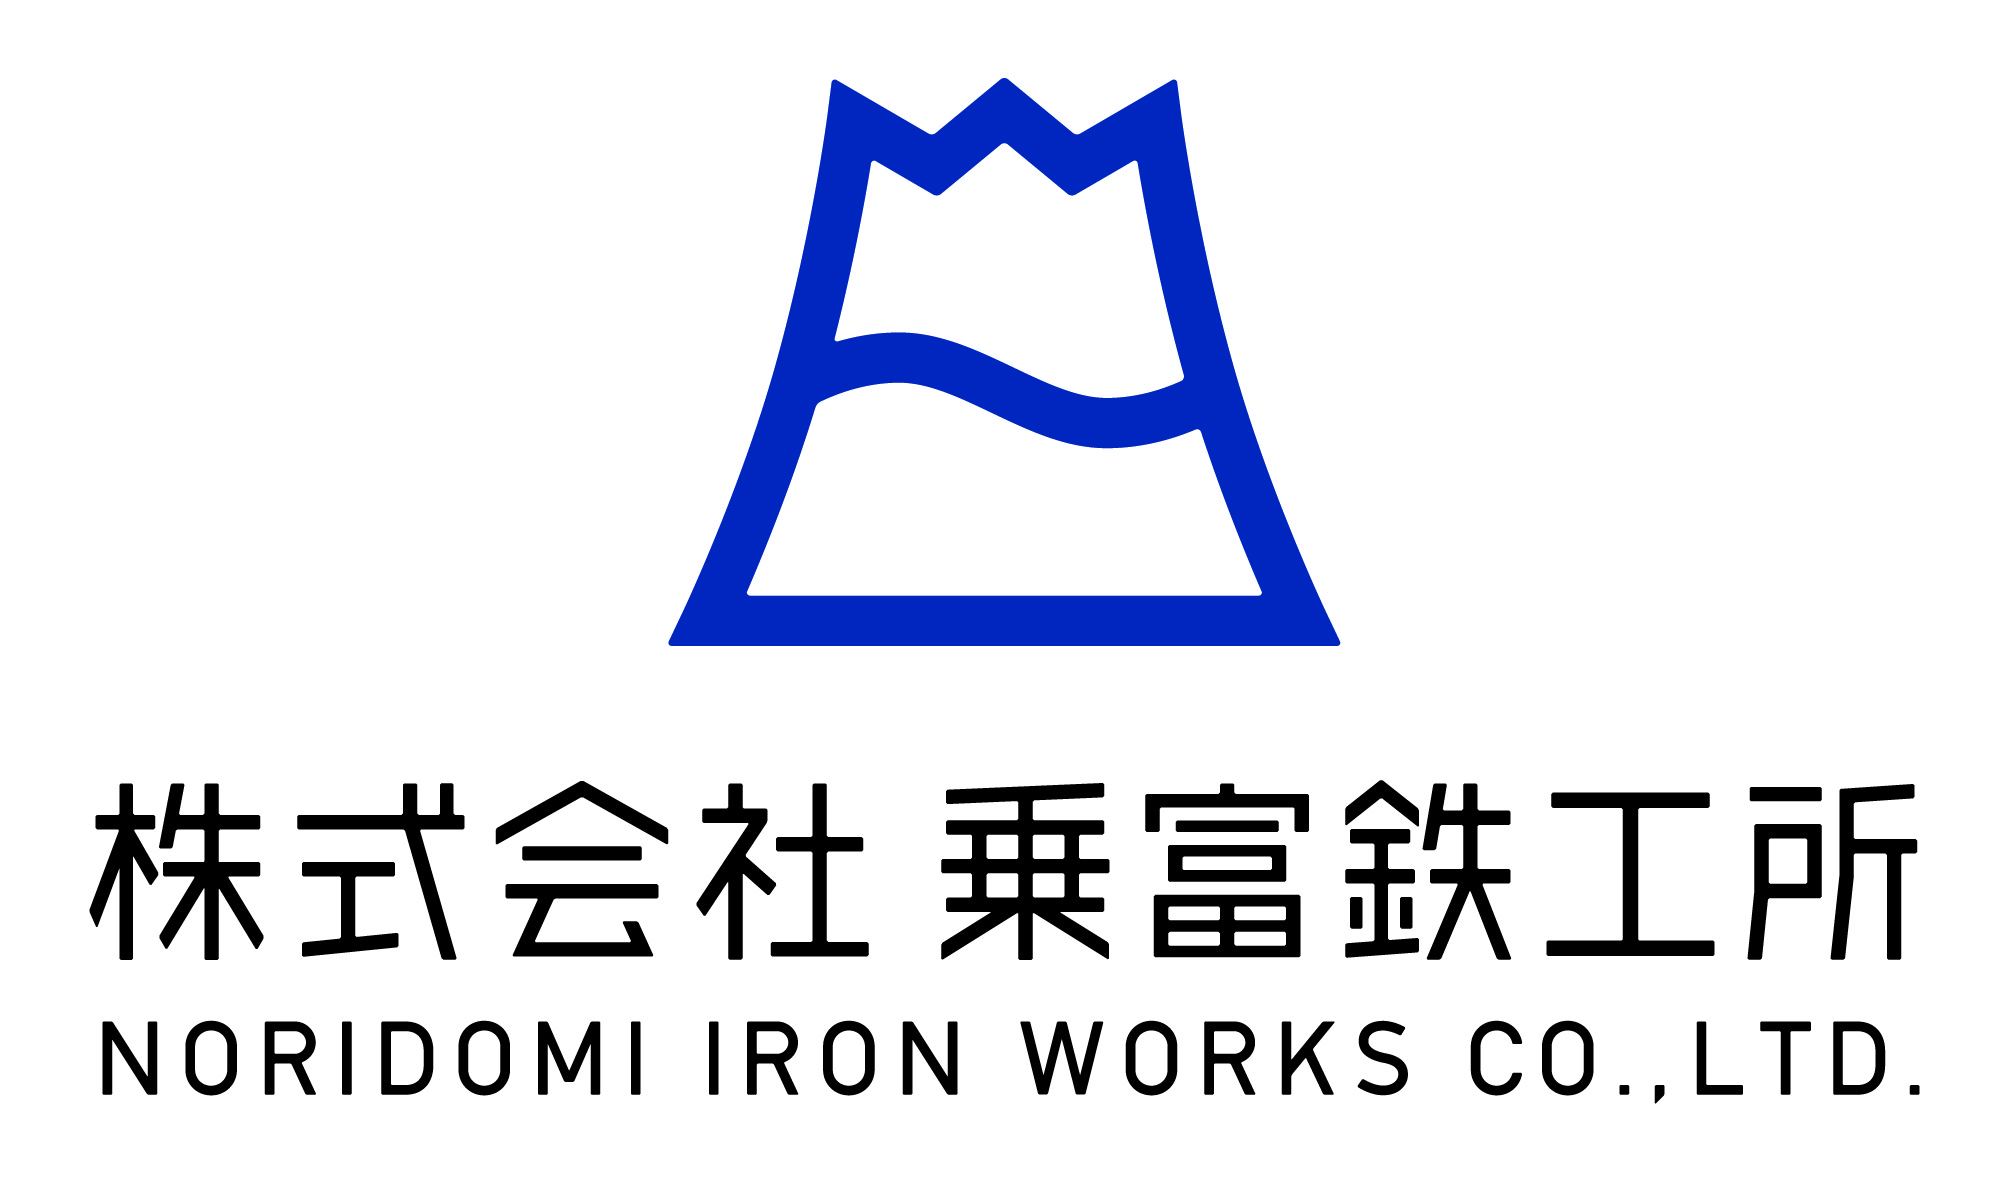 Noridomi ironworks Company, Limited